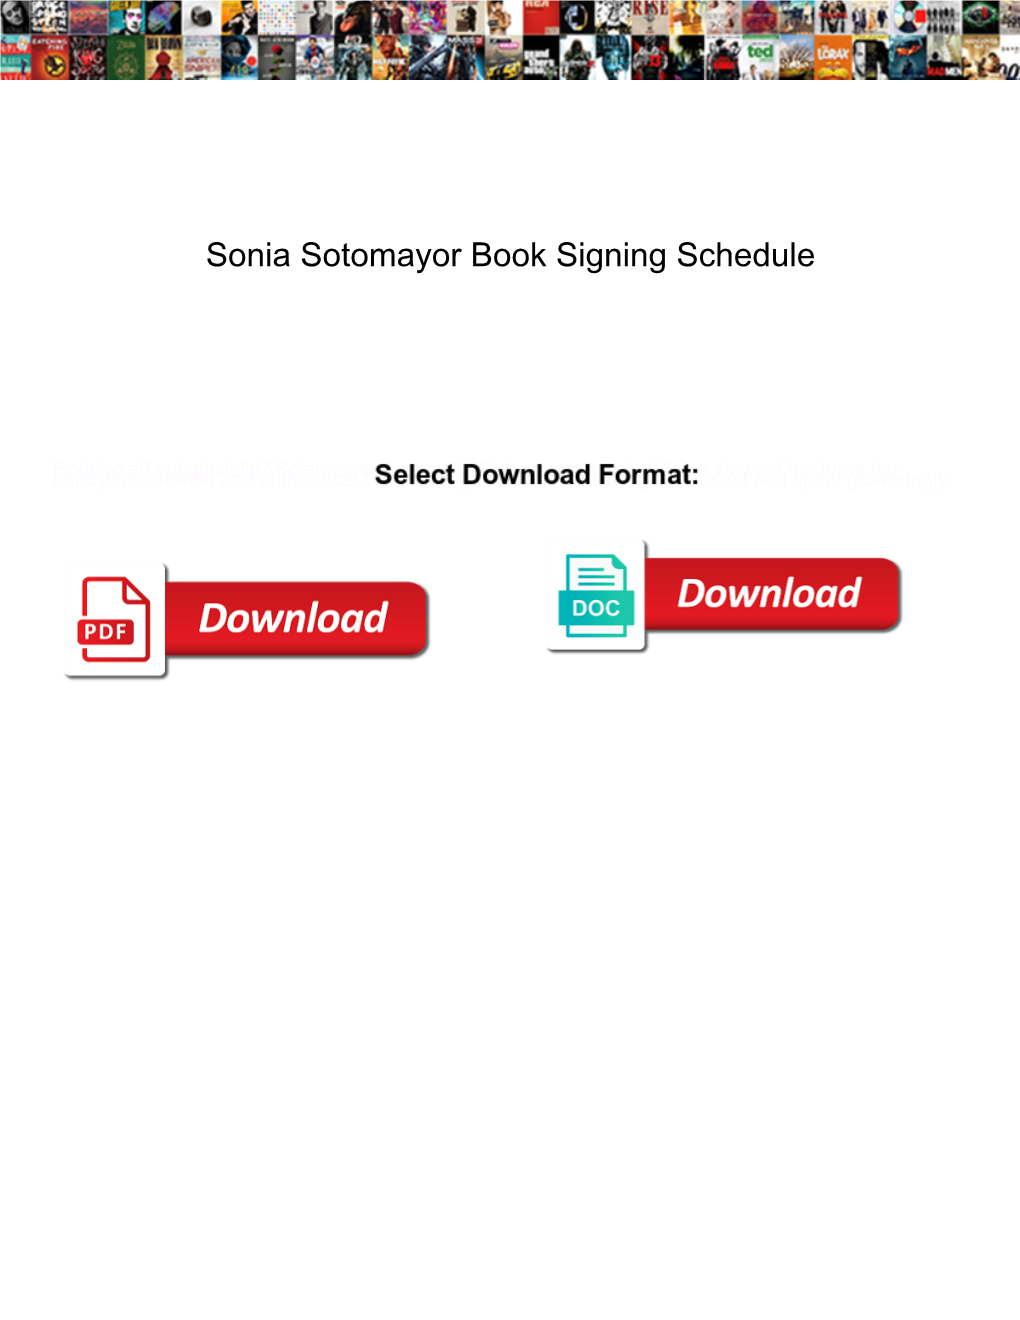 Sonia Sotomayor Book Signing Schedule